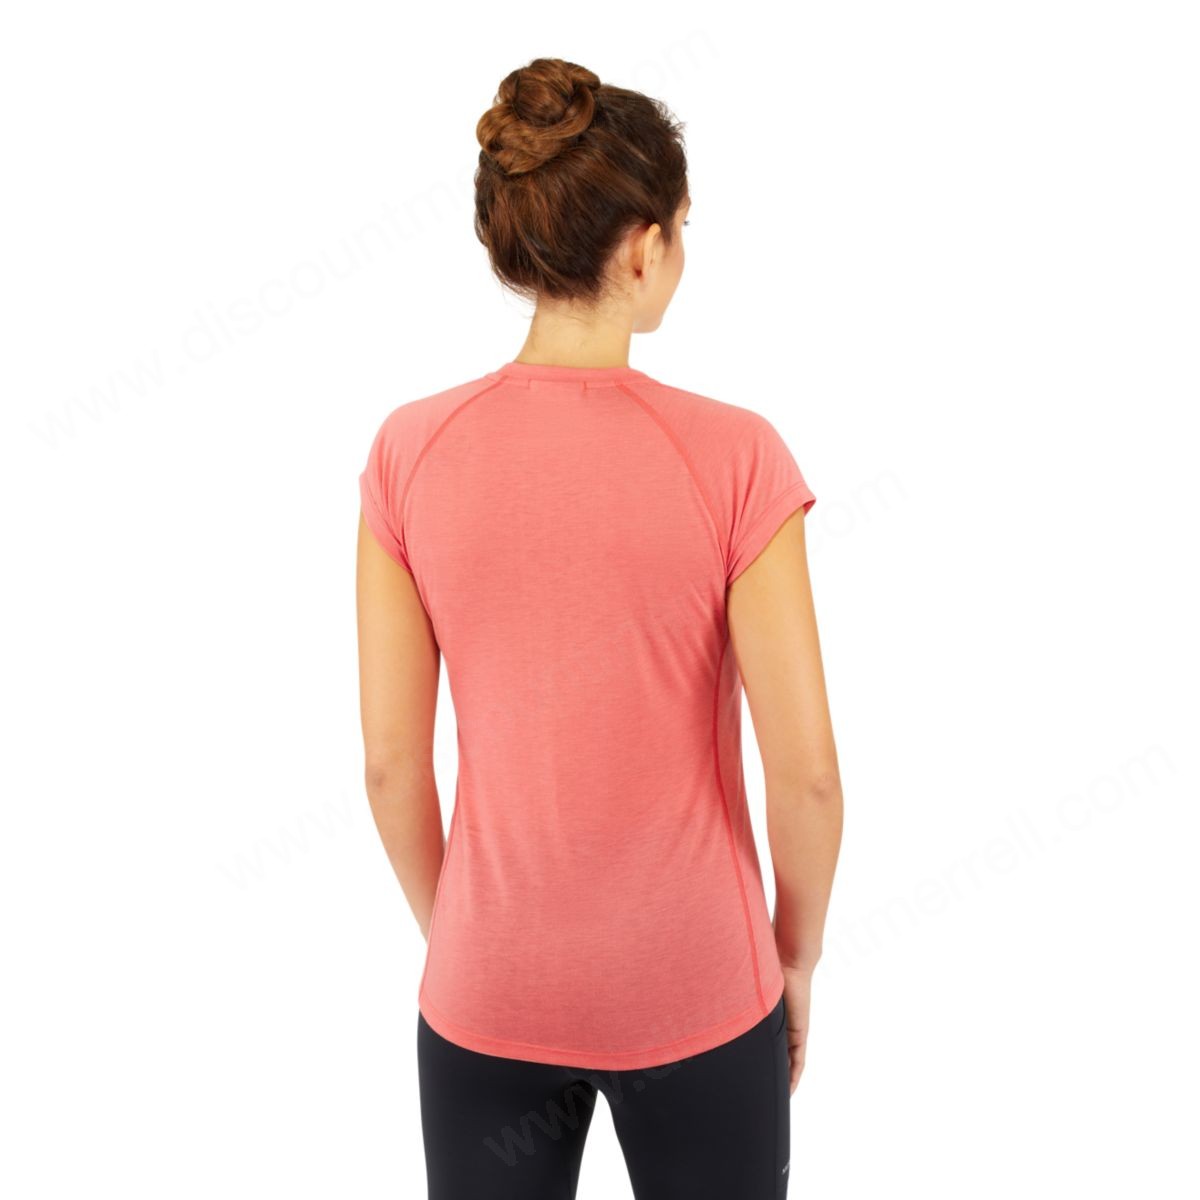 Merrell Womens's Paradox Short Sleeve Tech Tshirt With Drirelease® Fabric Aquifer Heather - -3